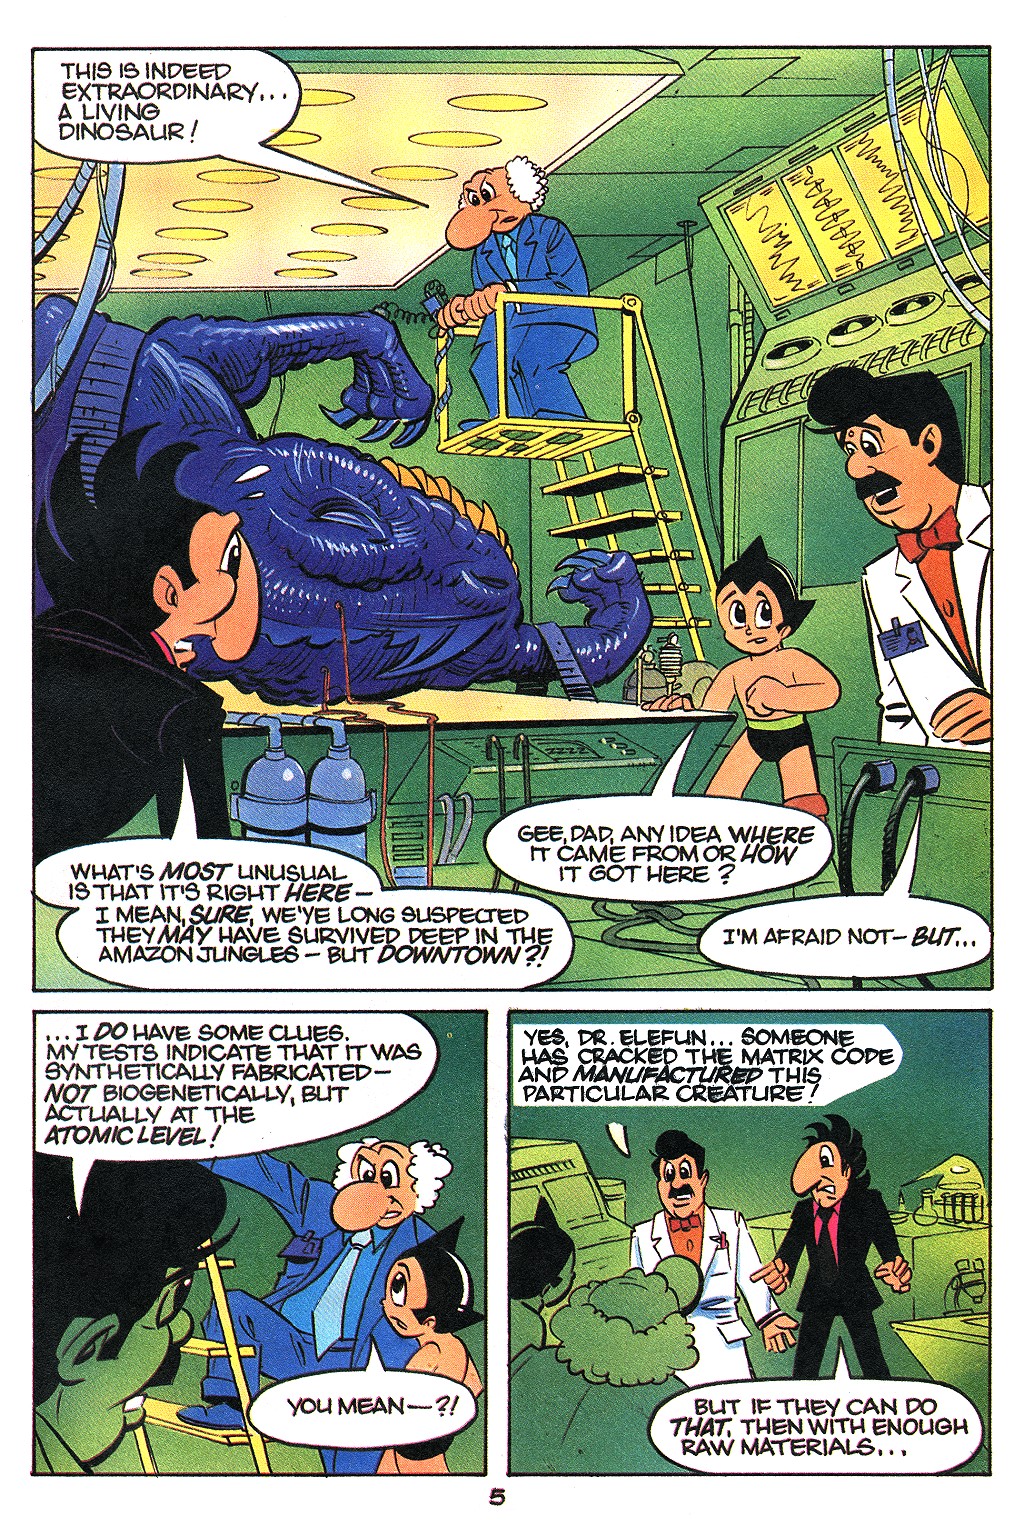 The Original Astro Boy 14 | Read The Original Astro Boy 14 comic online in  high quality. Read Full Comic online for free - Read comics online in high  quality .